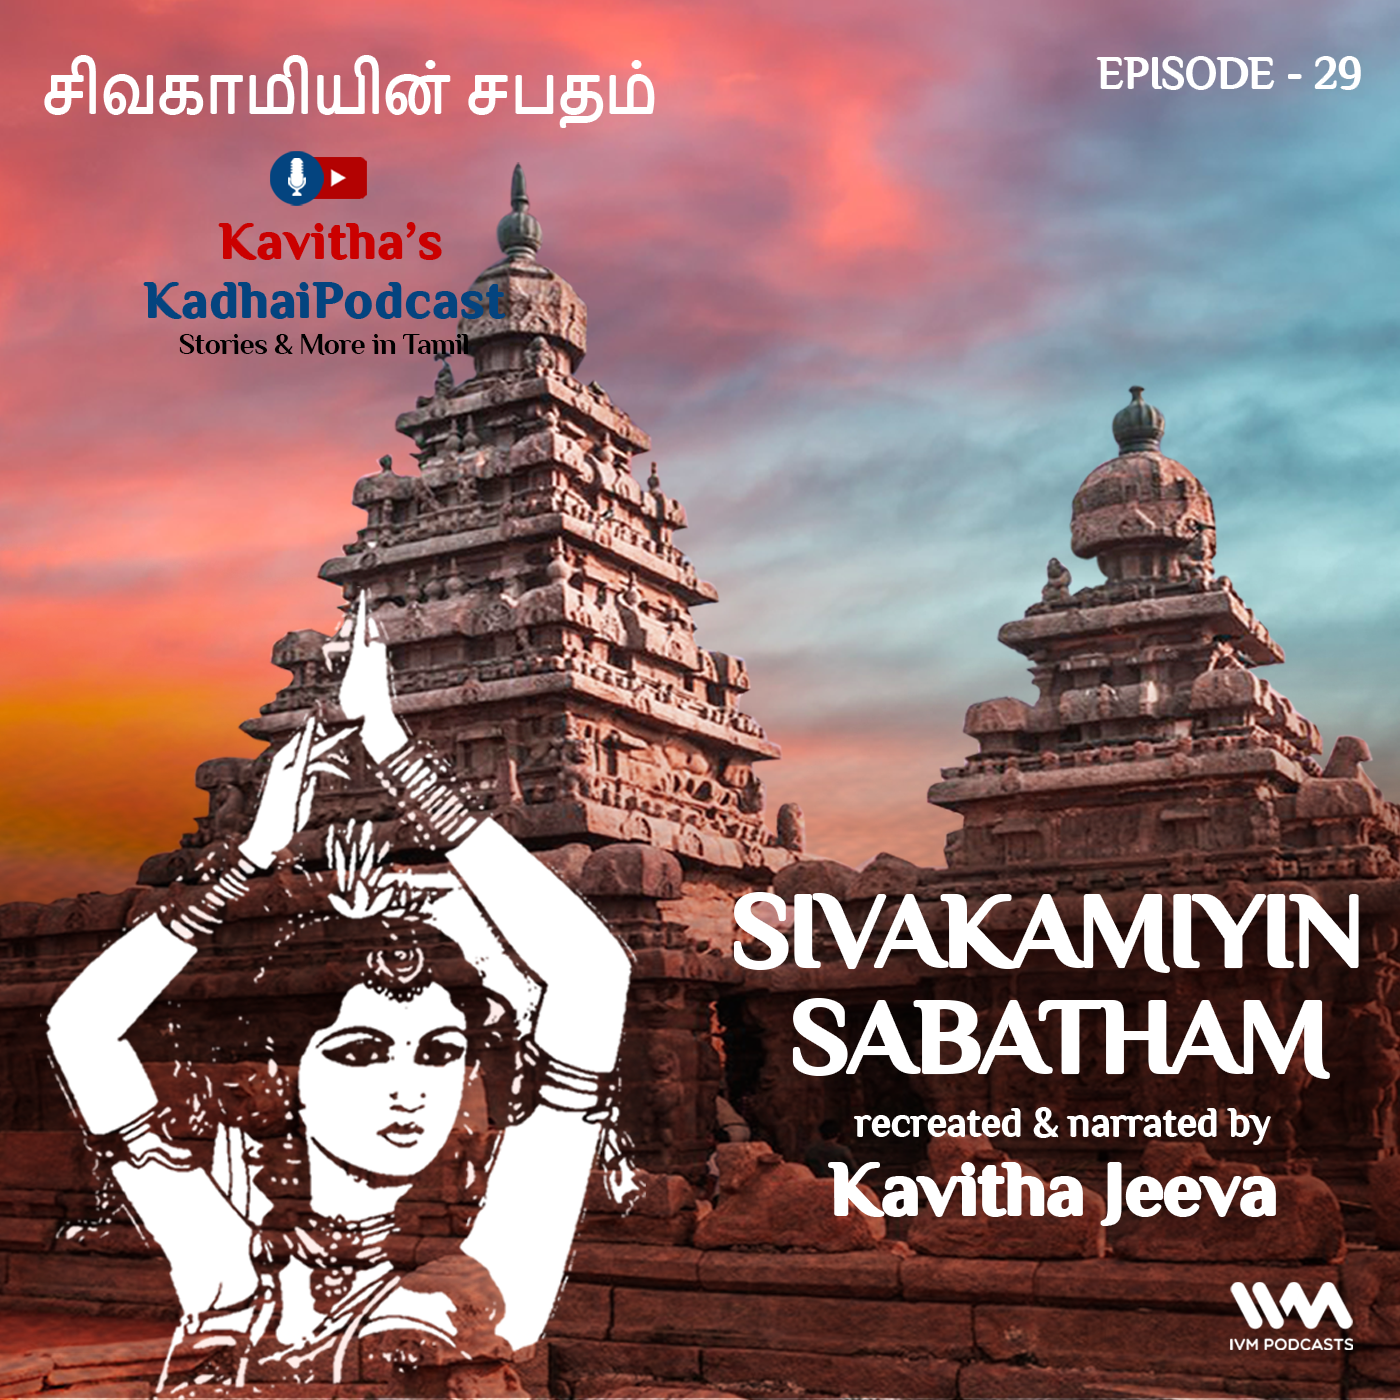 KadhaiPodcast’s Sivakamiyin Sabatham - Episode # 29